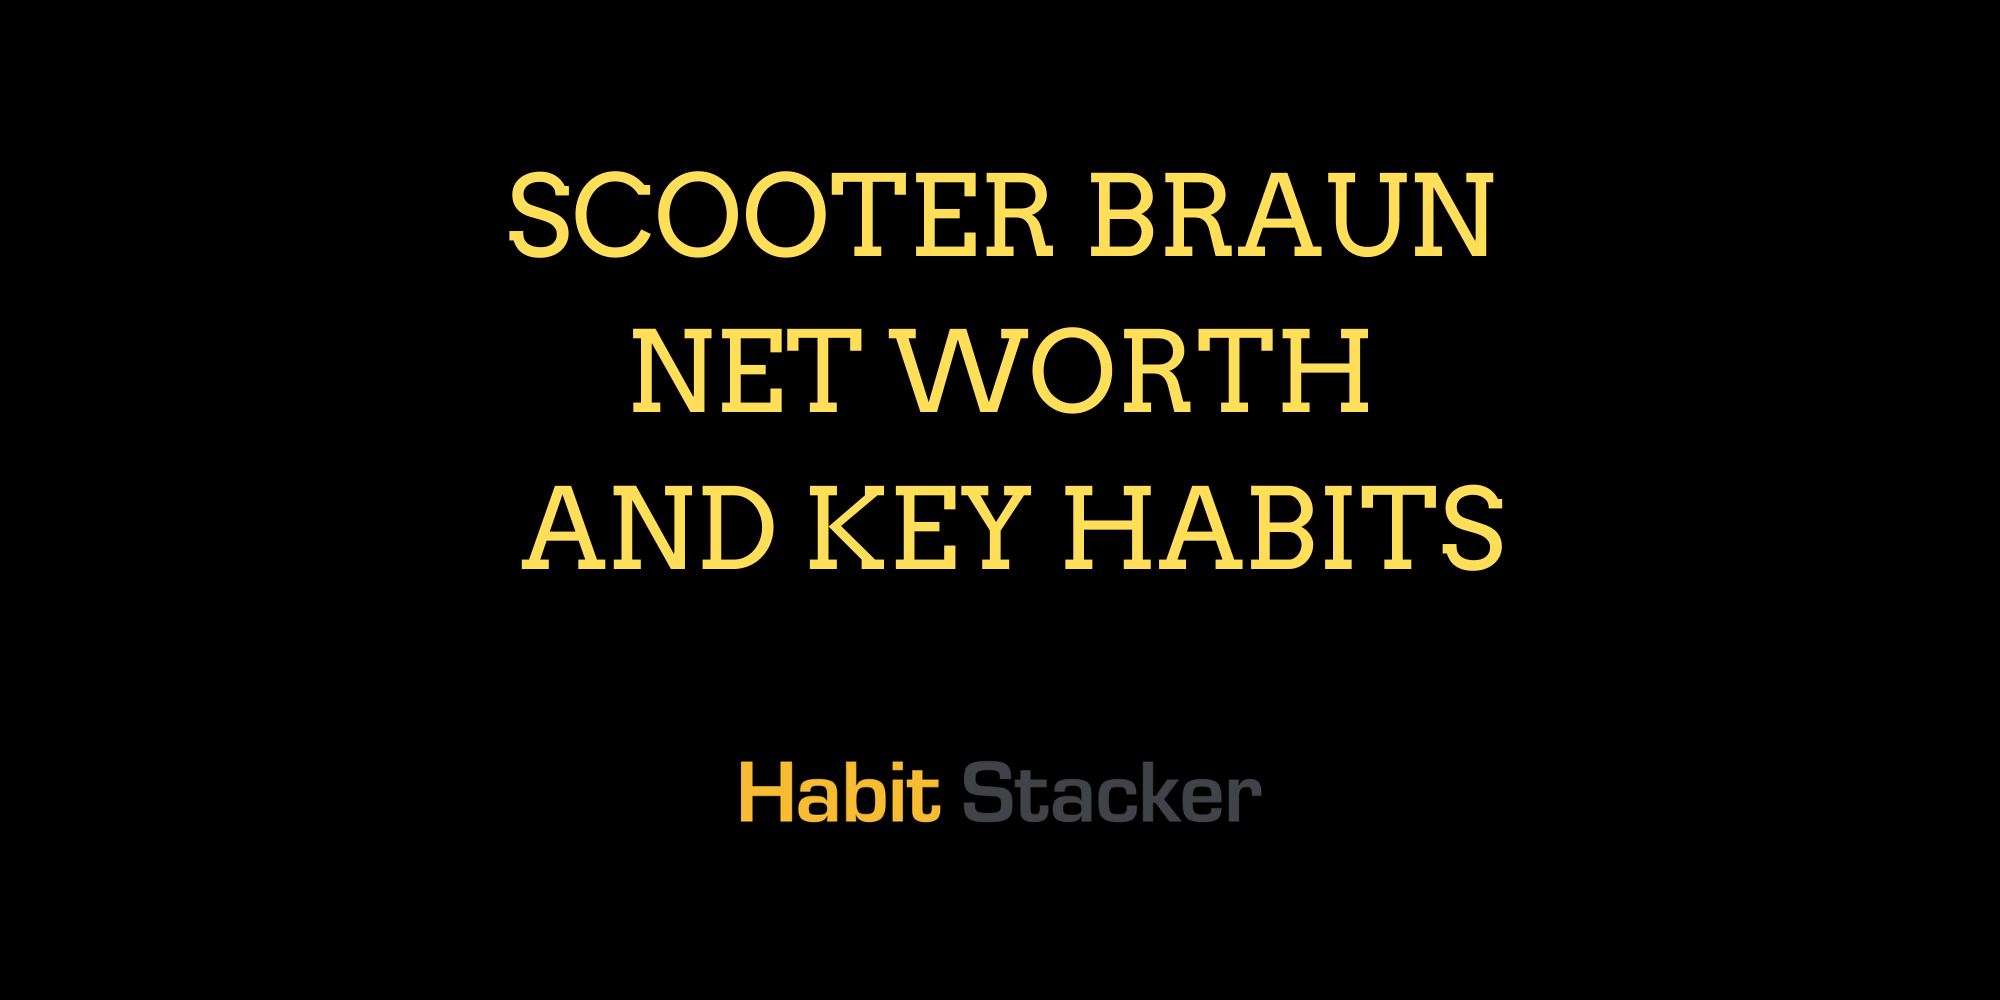 Scooter Braun Net Worth and Key Habits